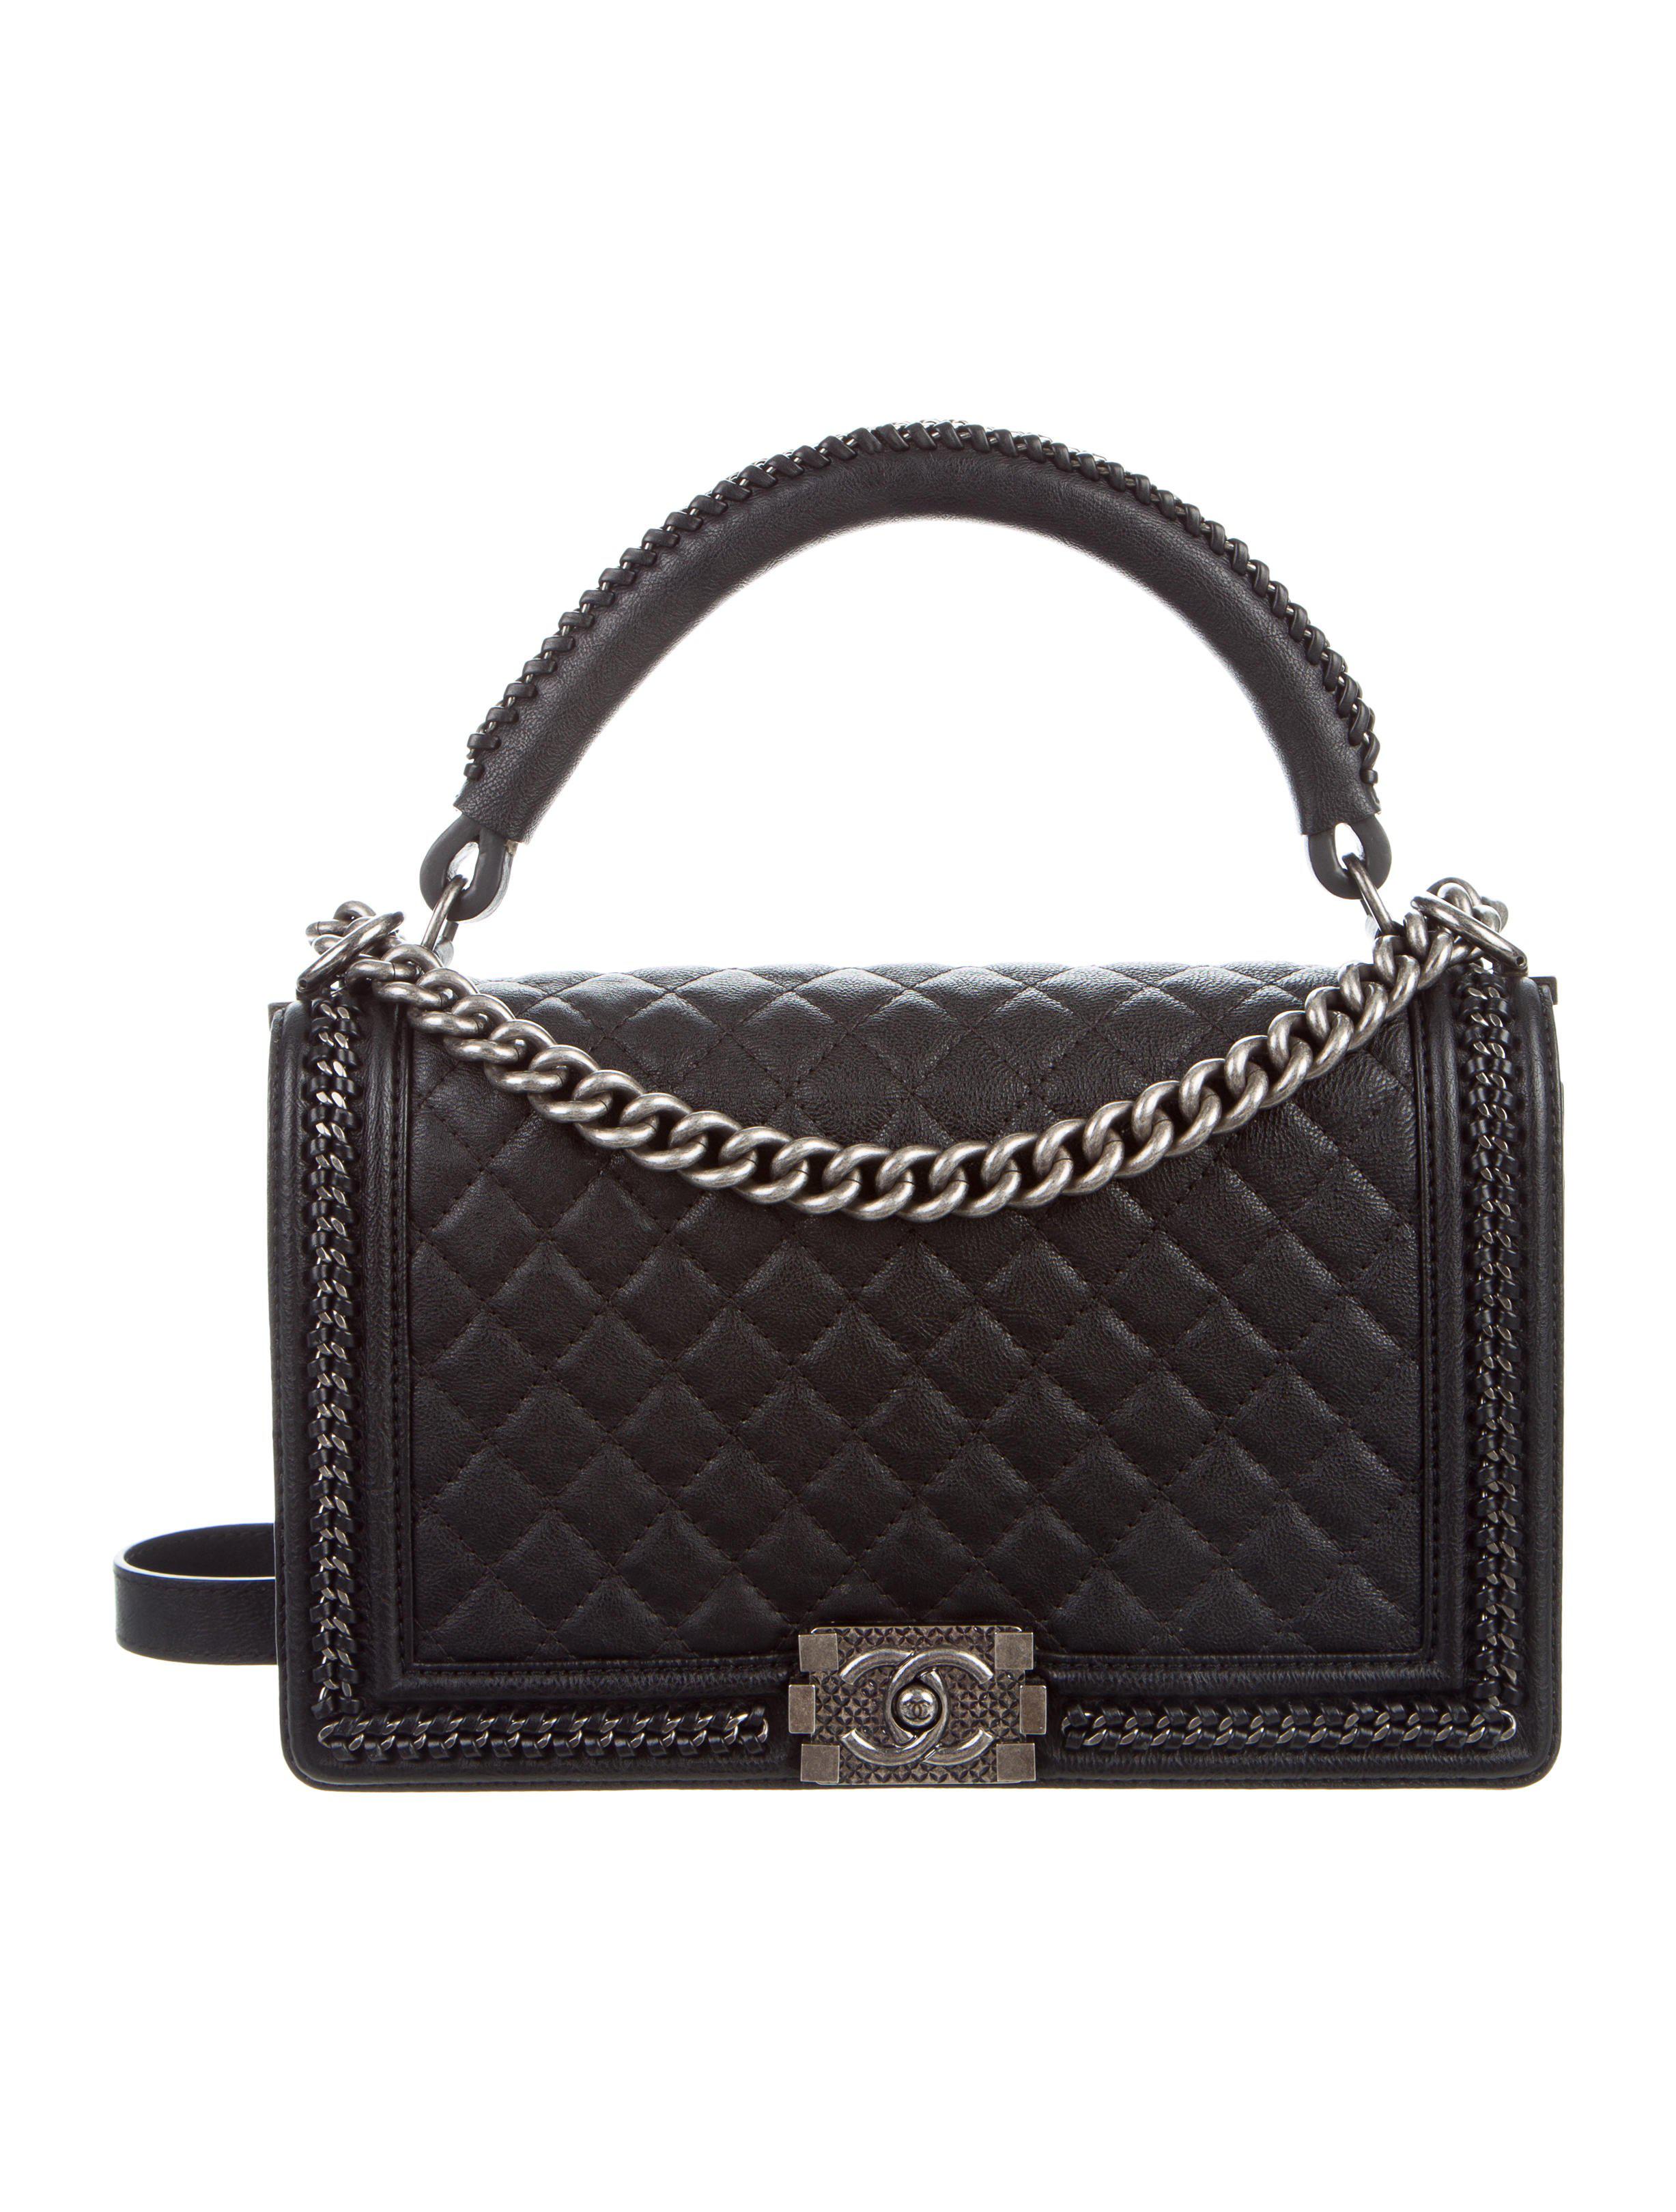 Chanel Black Handbag With Handle | semashow.com